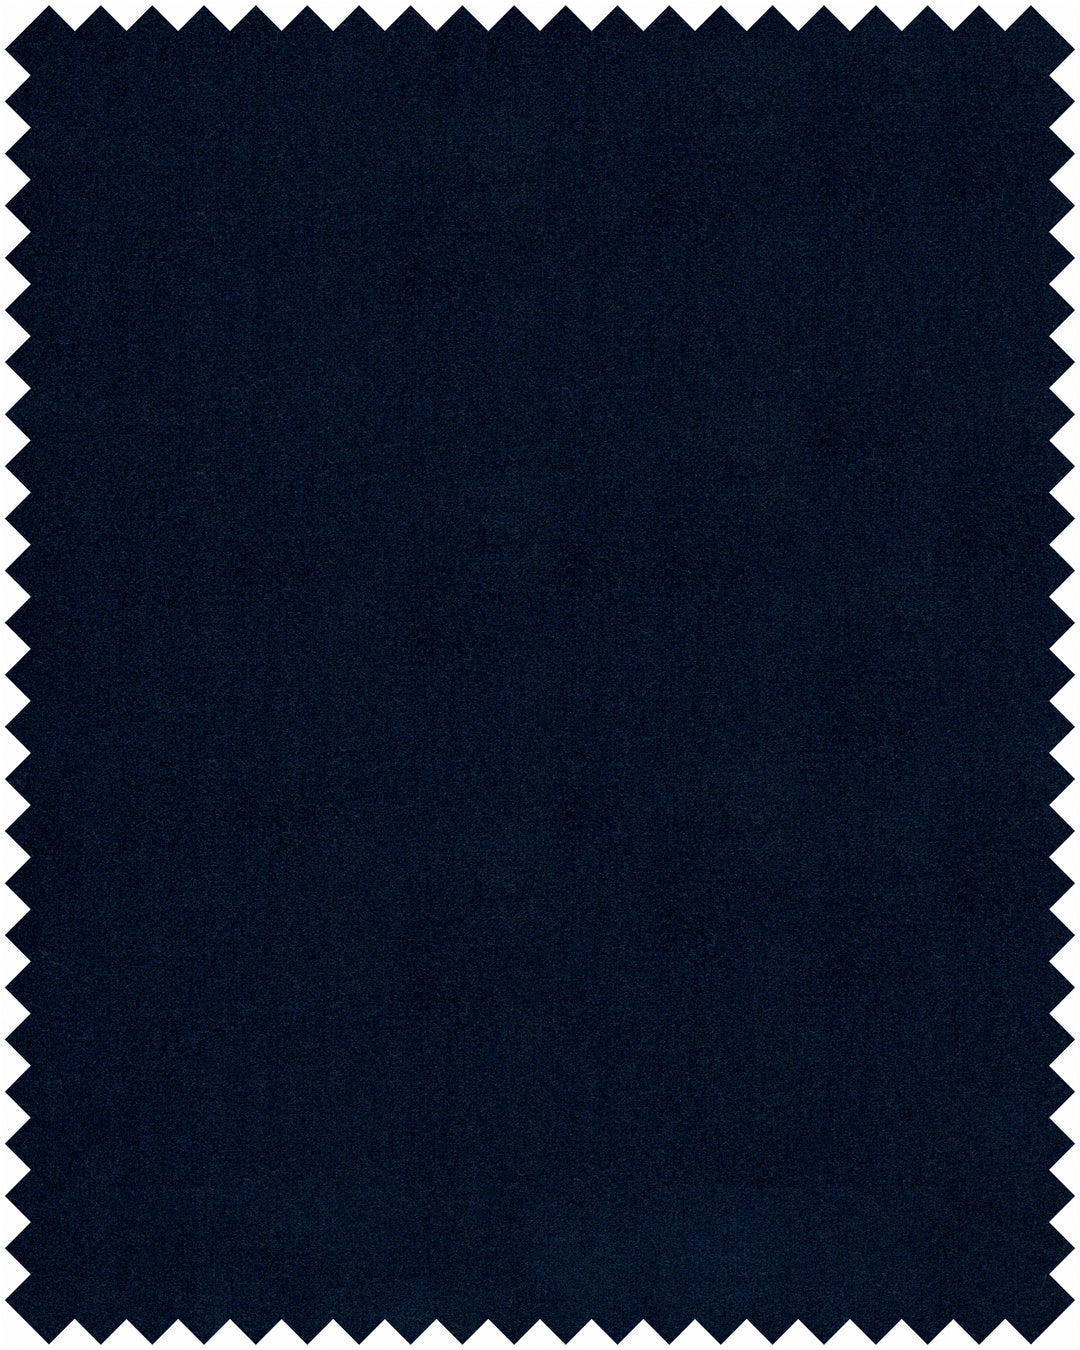 poseidon-indigo-blue-cotton-velvet-luxury-designer-fabric-upholstery-curtains-cushions-mindthgap-the-design-yard